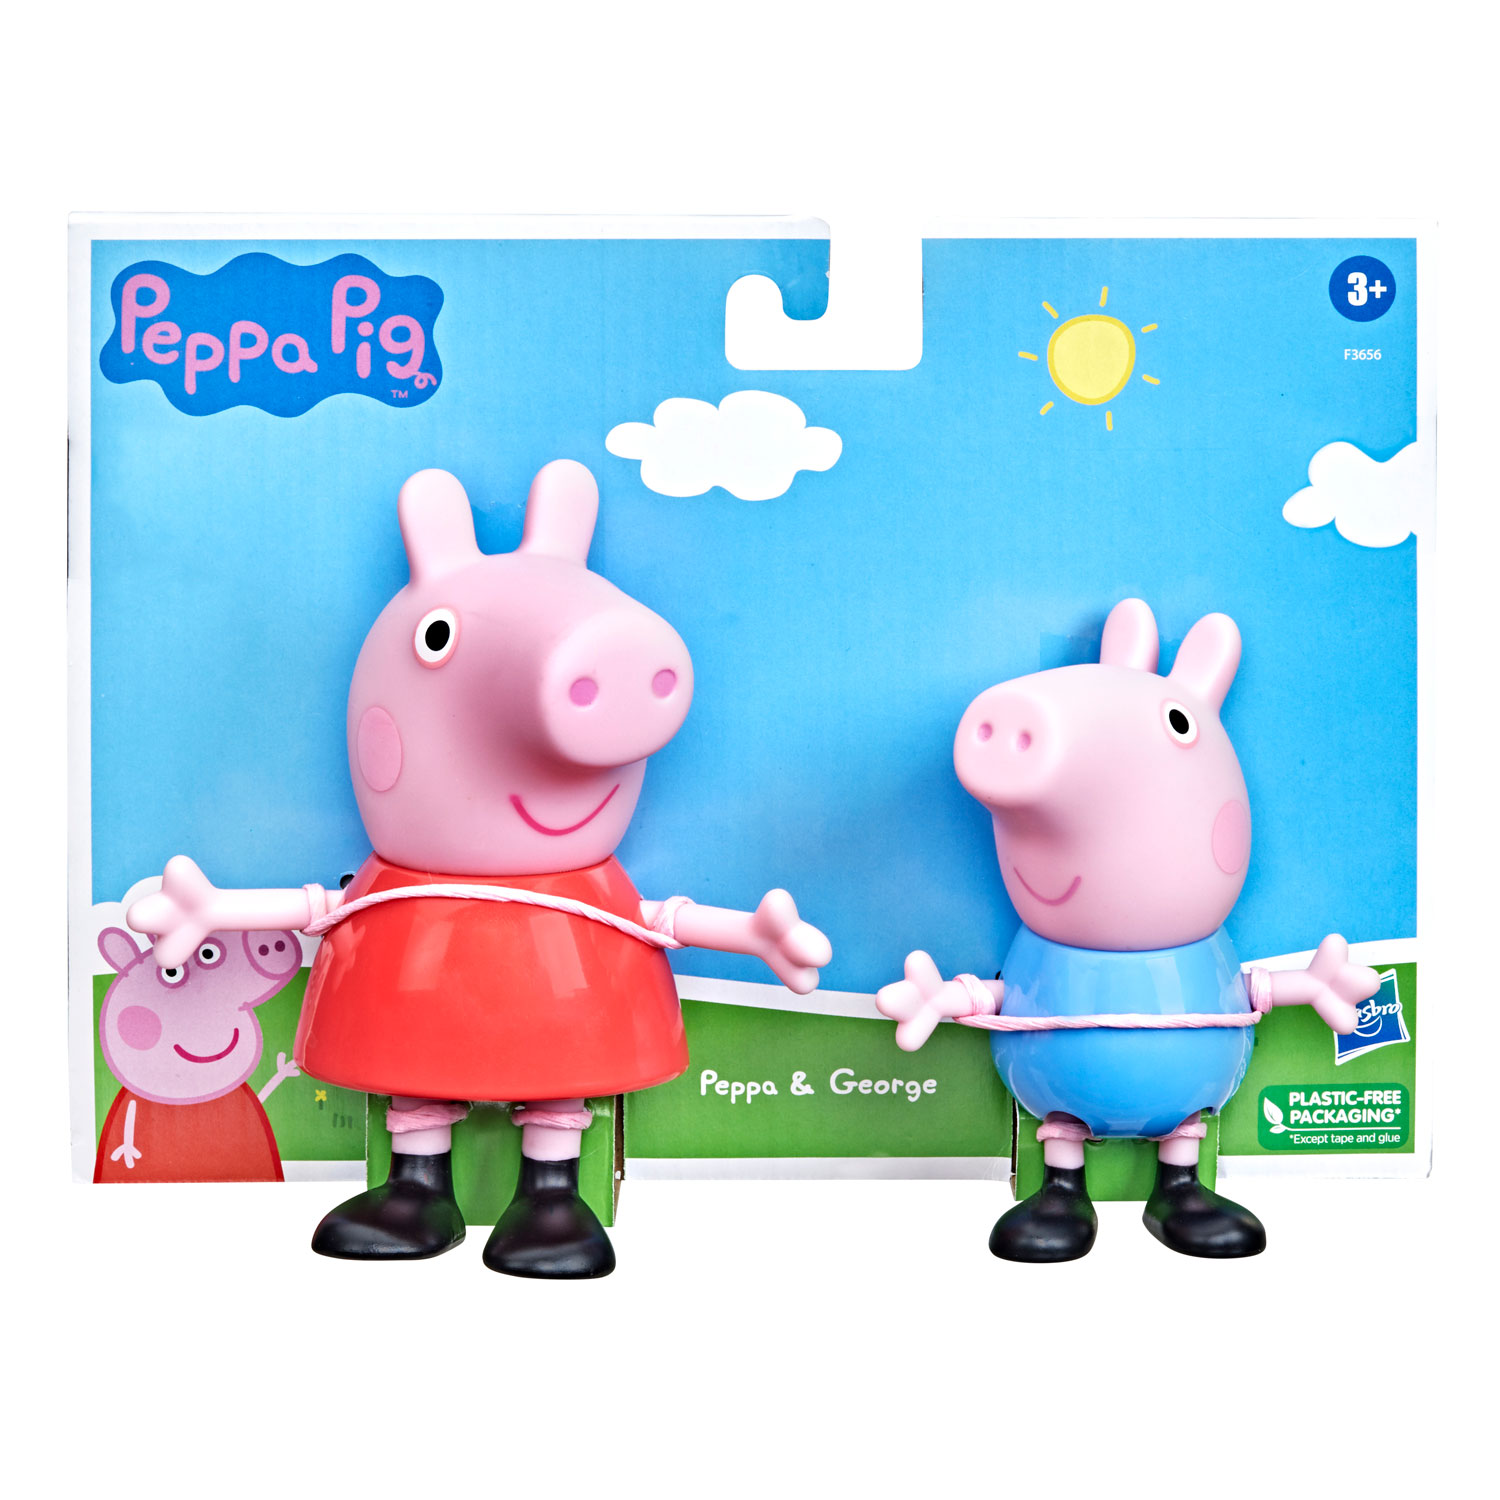 Peppa Pig - Set of 2 figurines, Peppa & George